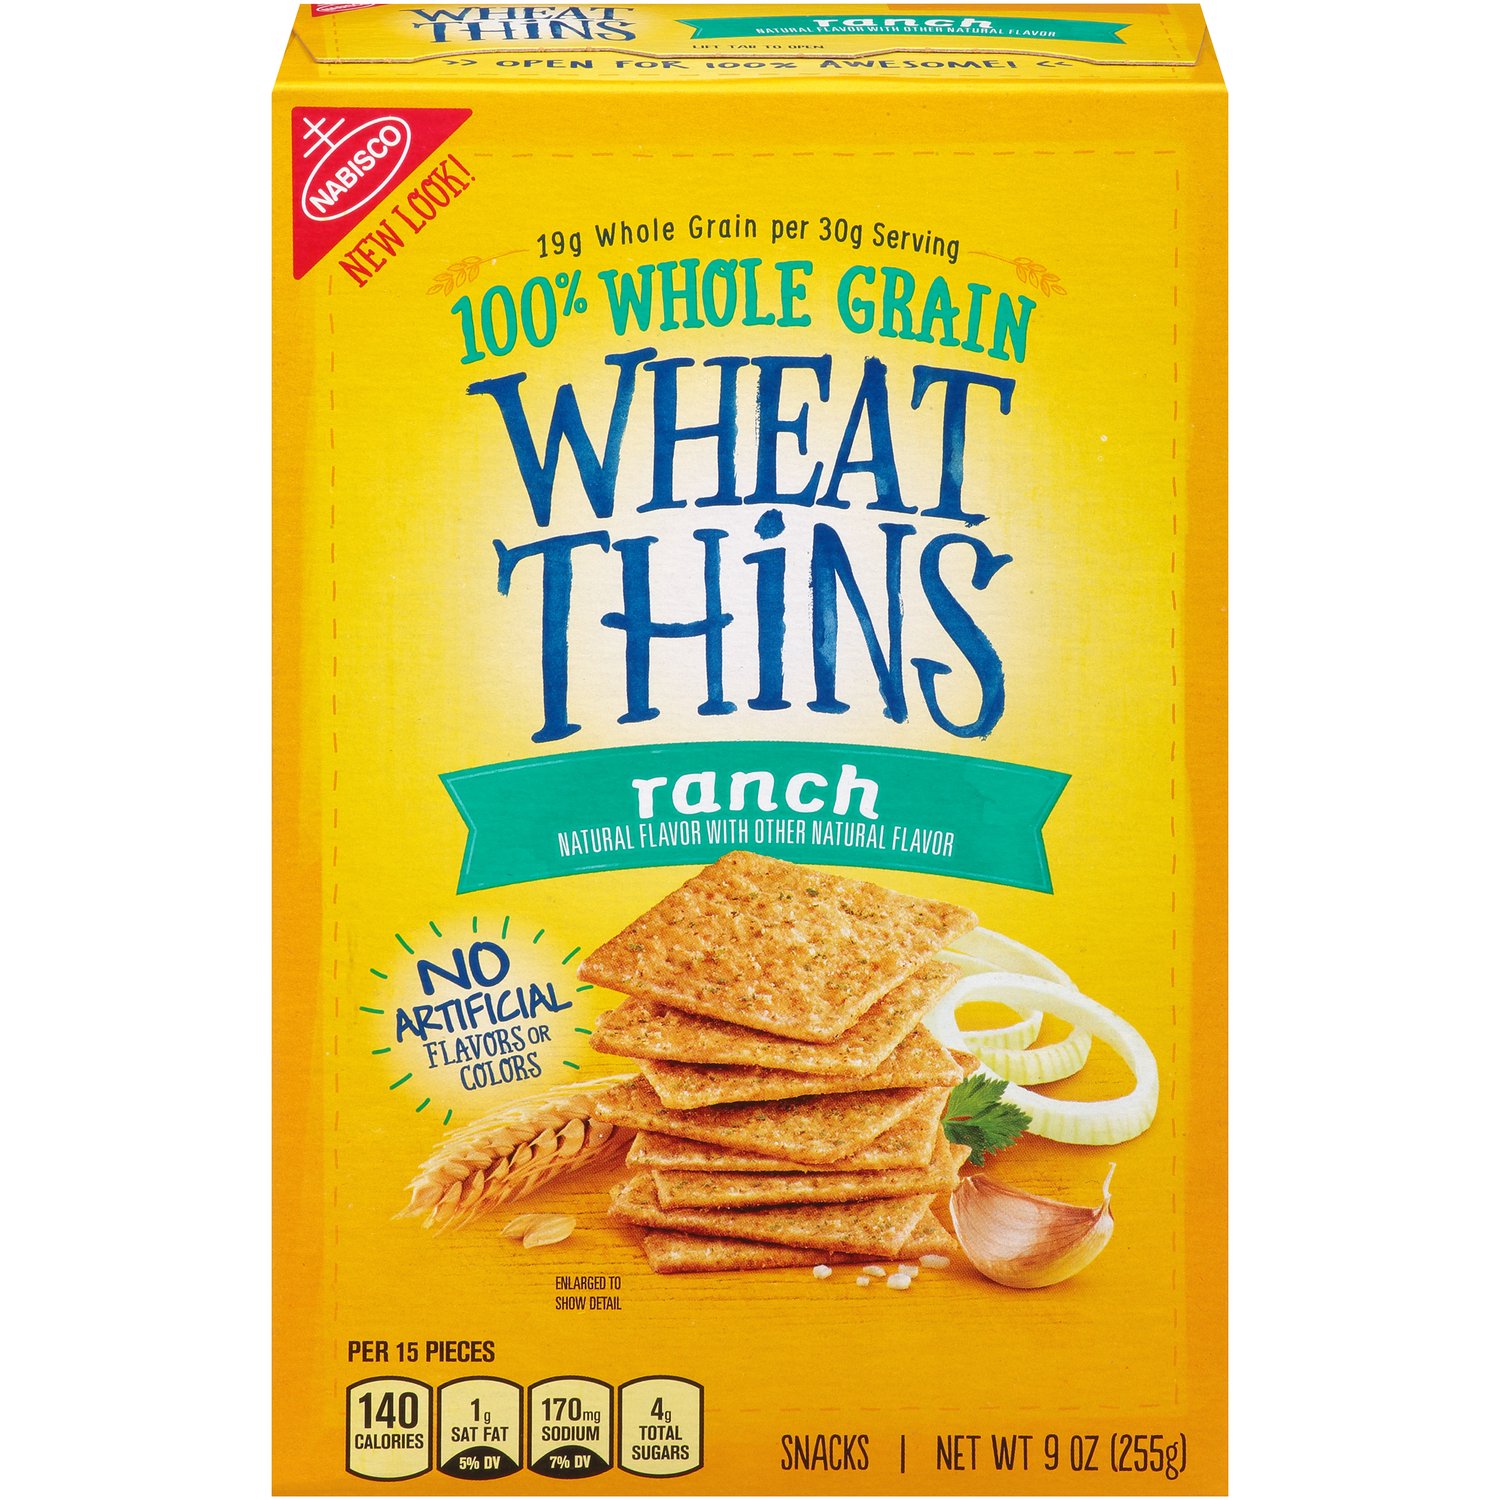 Good Thins Oat & Wheat Snacks 6.5 Oz, Crackers